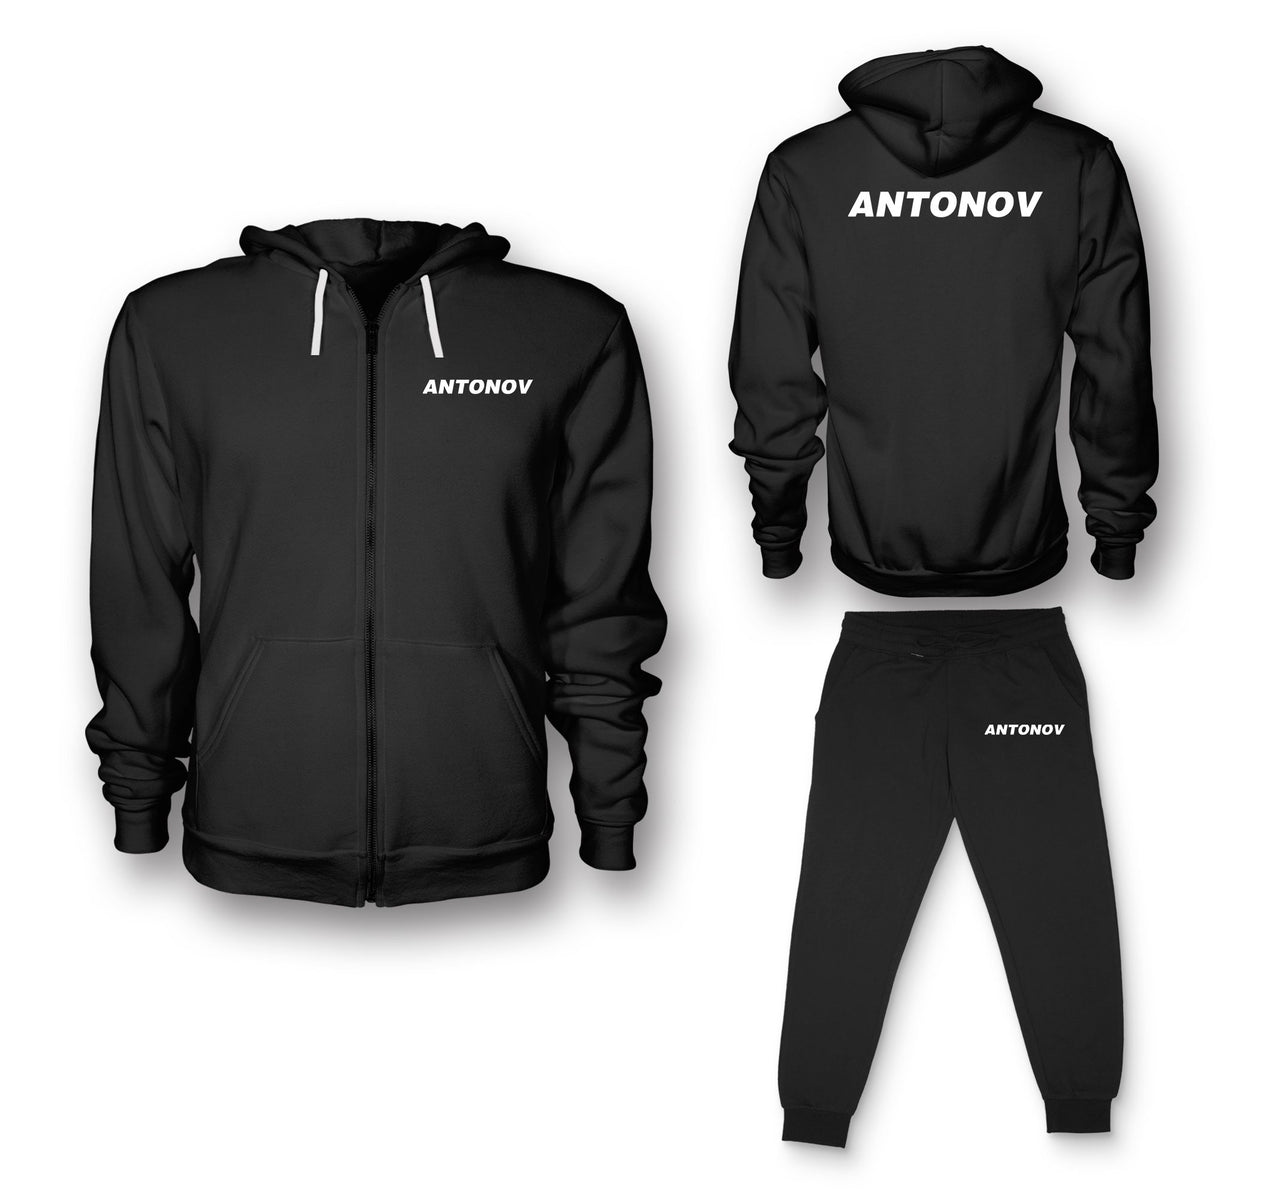 Antonov & Text Designed Zipped Hoodies & Sweatpants Set